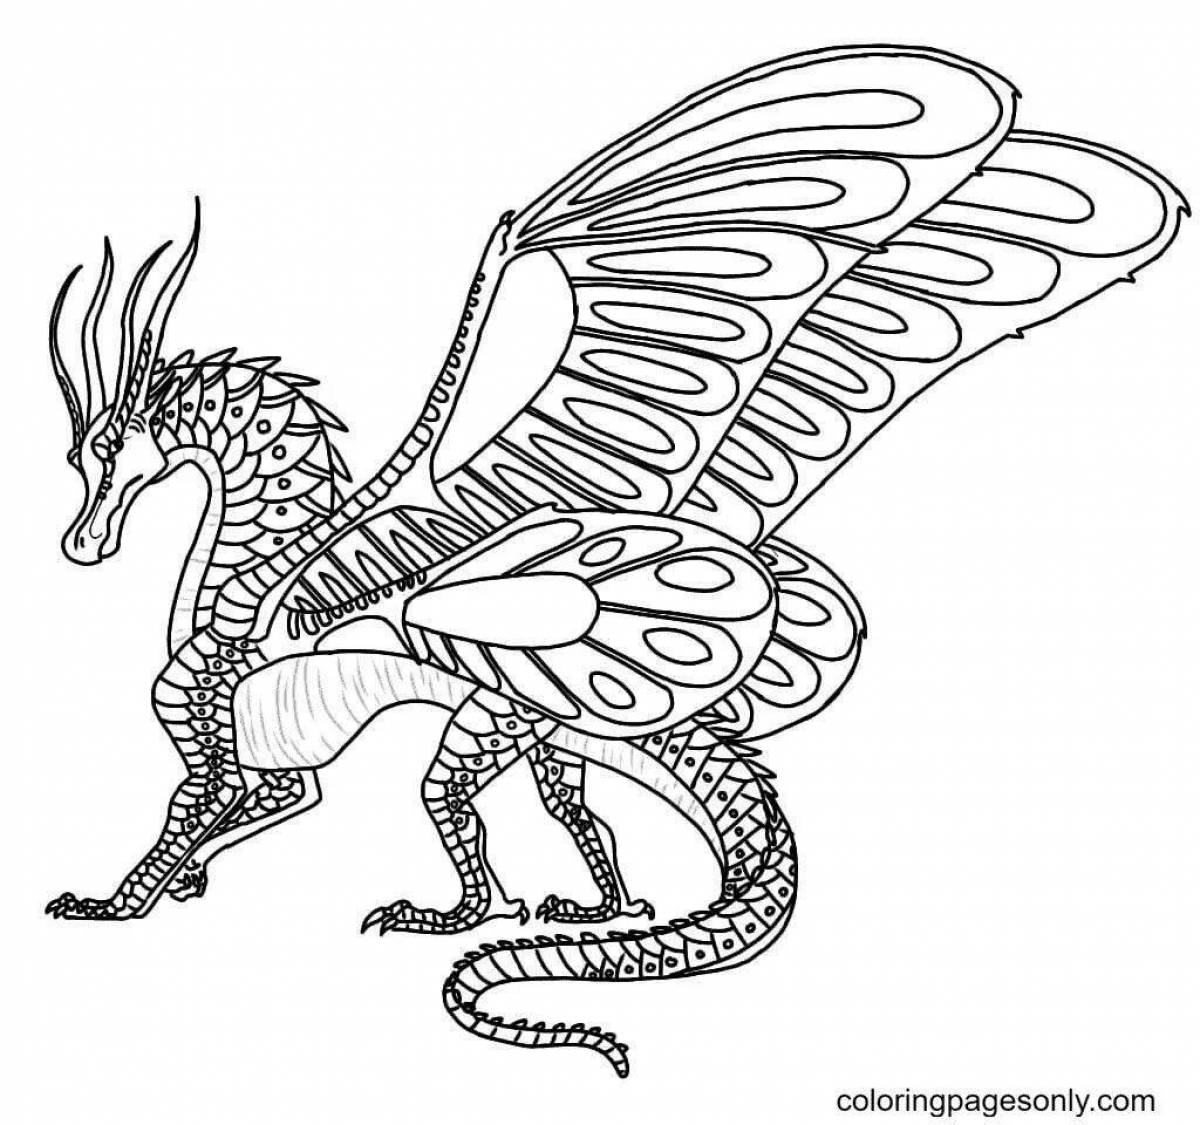 Winged dragon #1